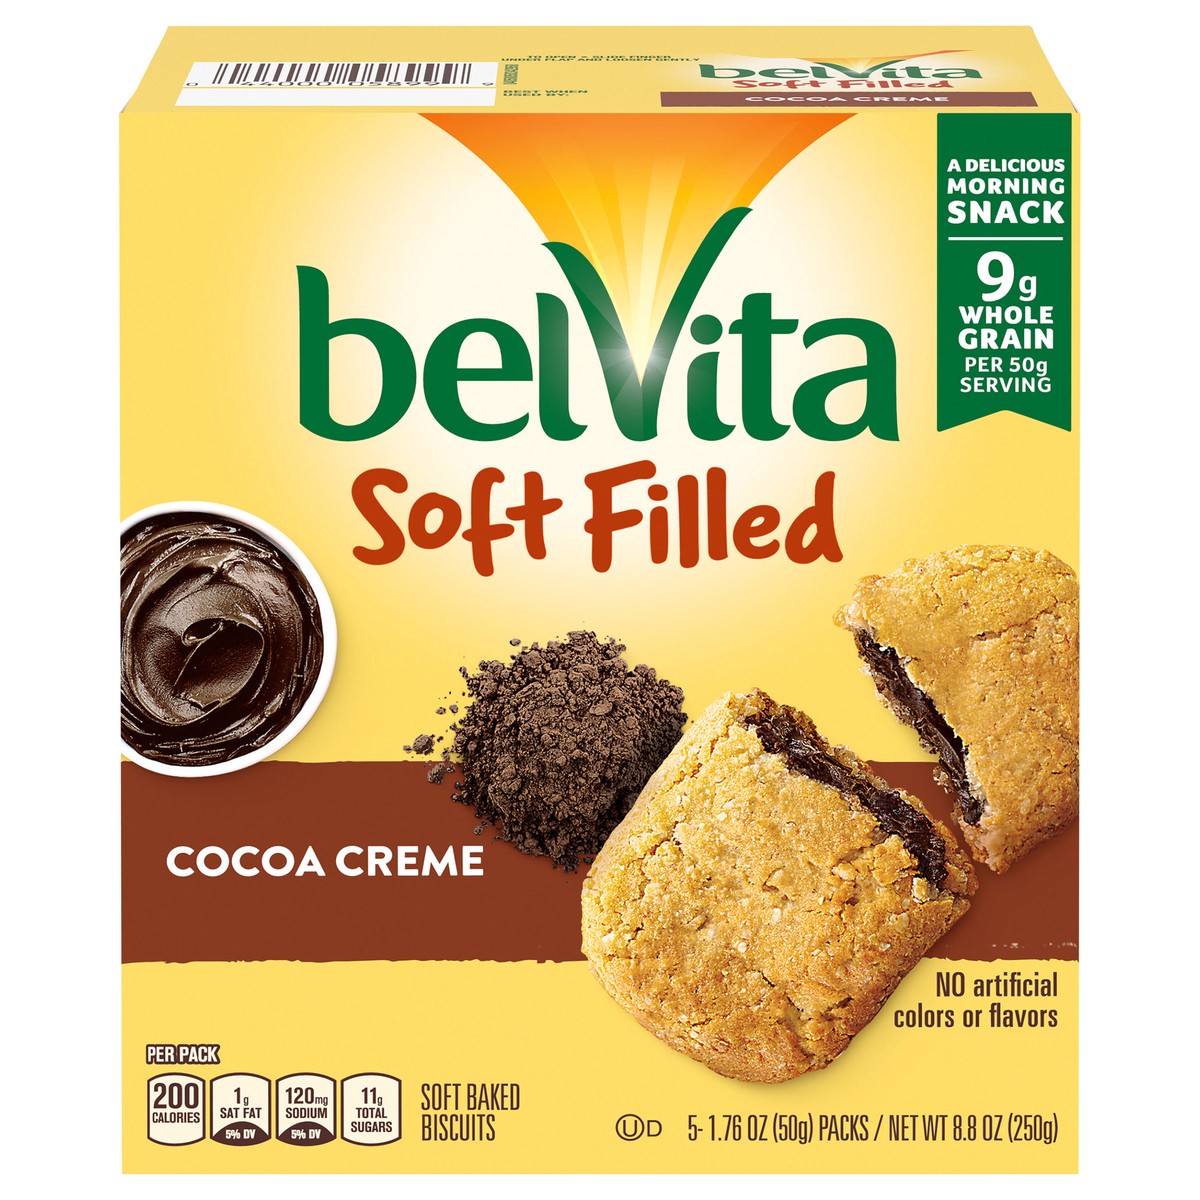 slide 1 of 9, belVita Nabisco belVita Belvita Soft Filled Cocoa Creme Soft Baked Biscuits 5-1.76 Oz. Packs, 8.8 oz